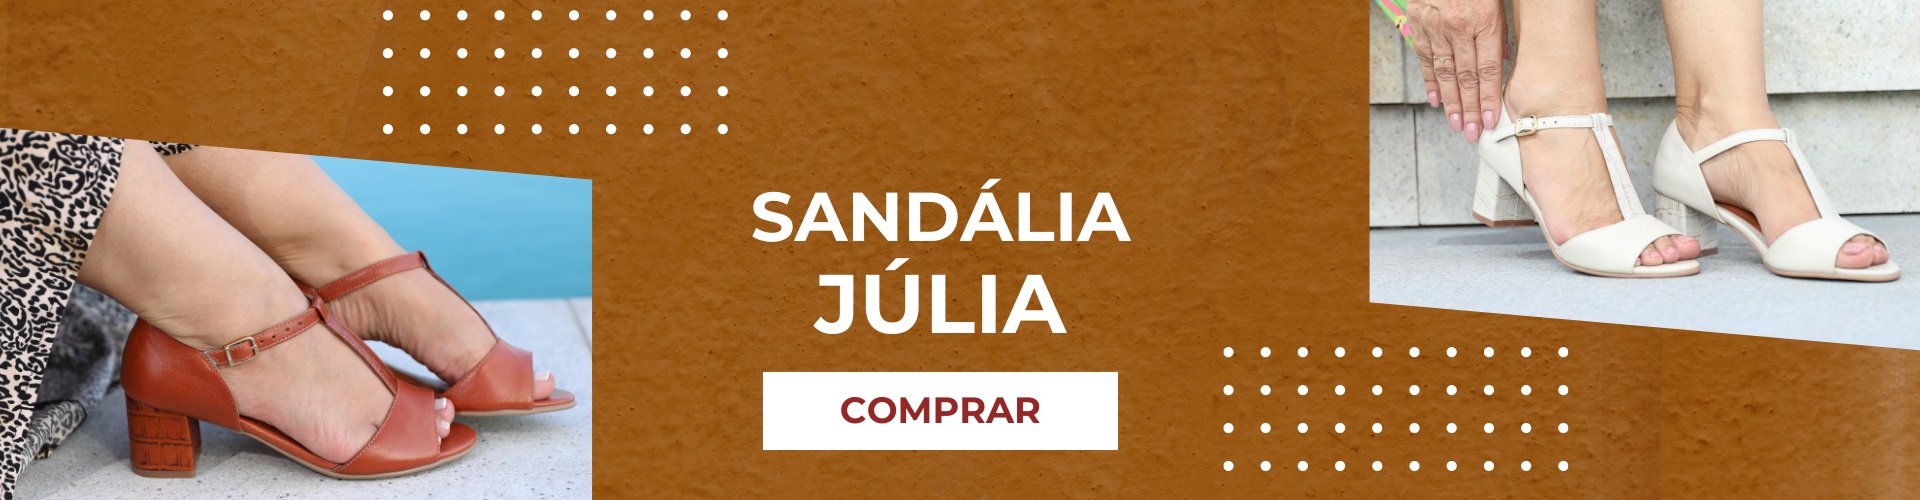 Sandália Júlia